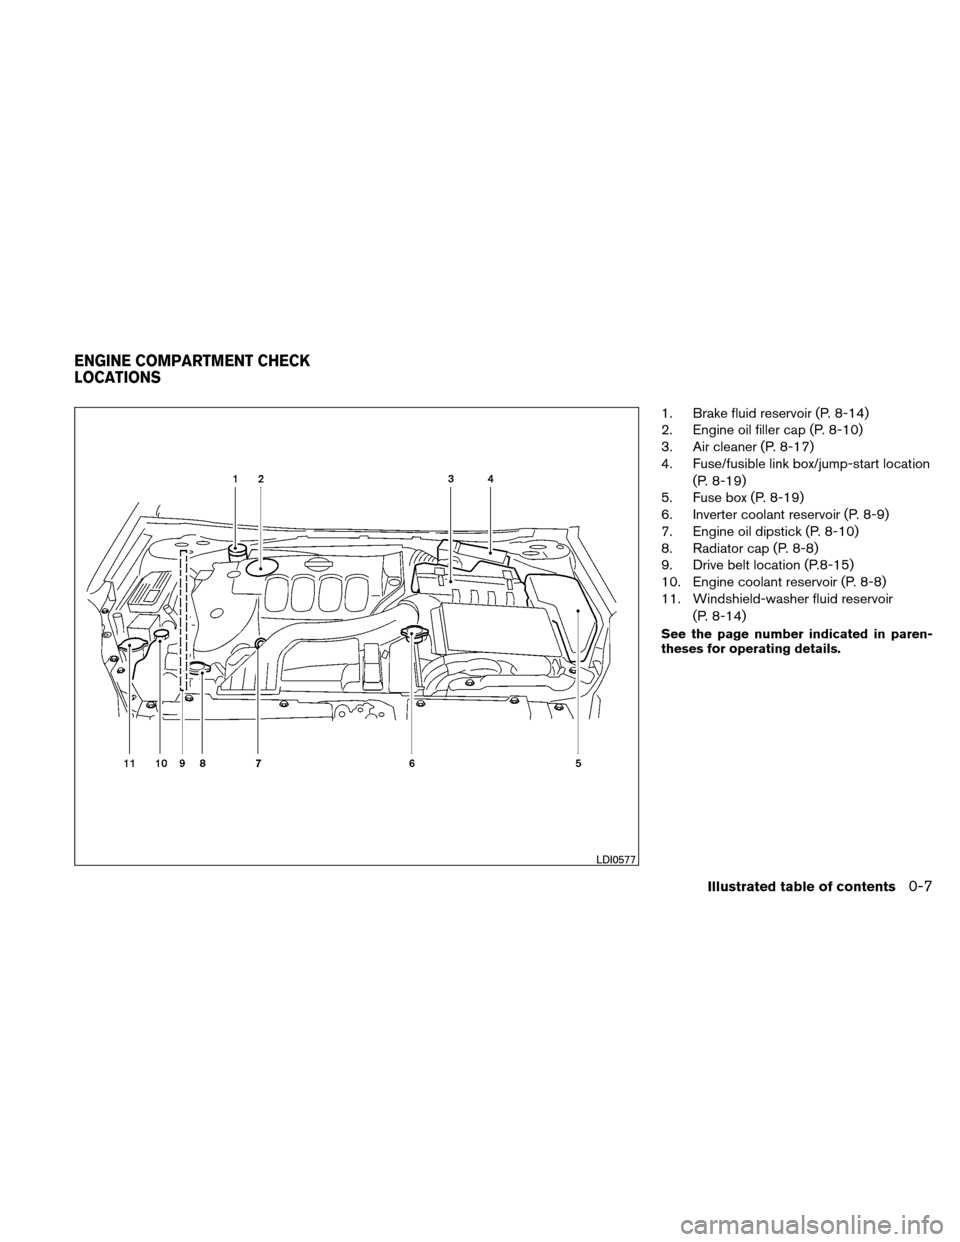 NISSAN ALTIMA HYBRID 2010 L32A / 4.G Owners Manual 1. Brake fluid reservoir (P. 8-14)
2. Engine oil filler cap (P. 8-10)
3. Air cleaner (P. 8-17)
4. Fuse/fusible link box/jump-start location(P. 8-19)
5. Fuse box (P. 8-19)
6. Inverter coolant reservoir